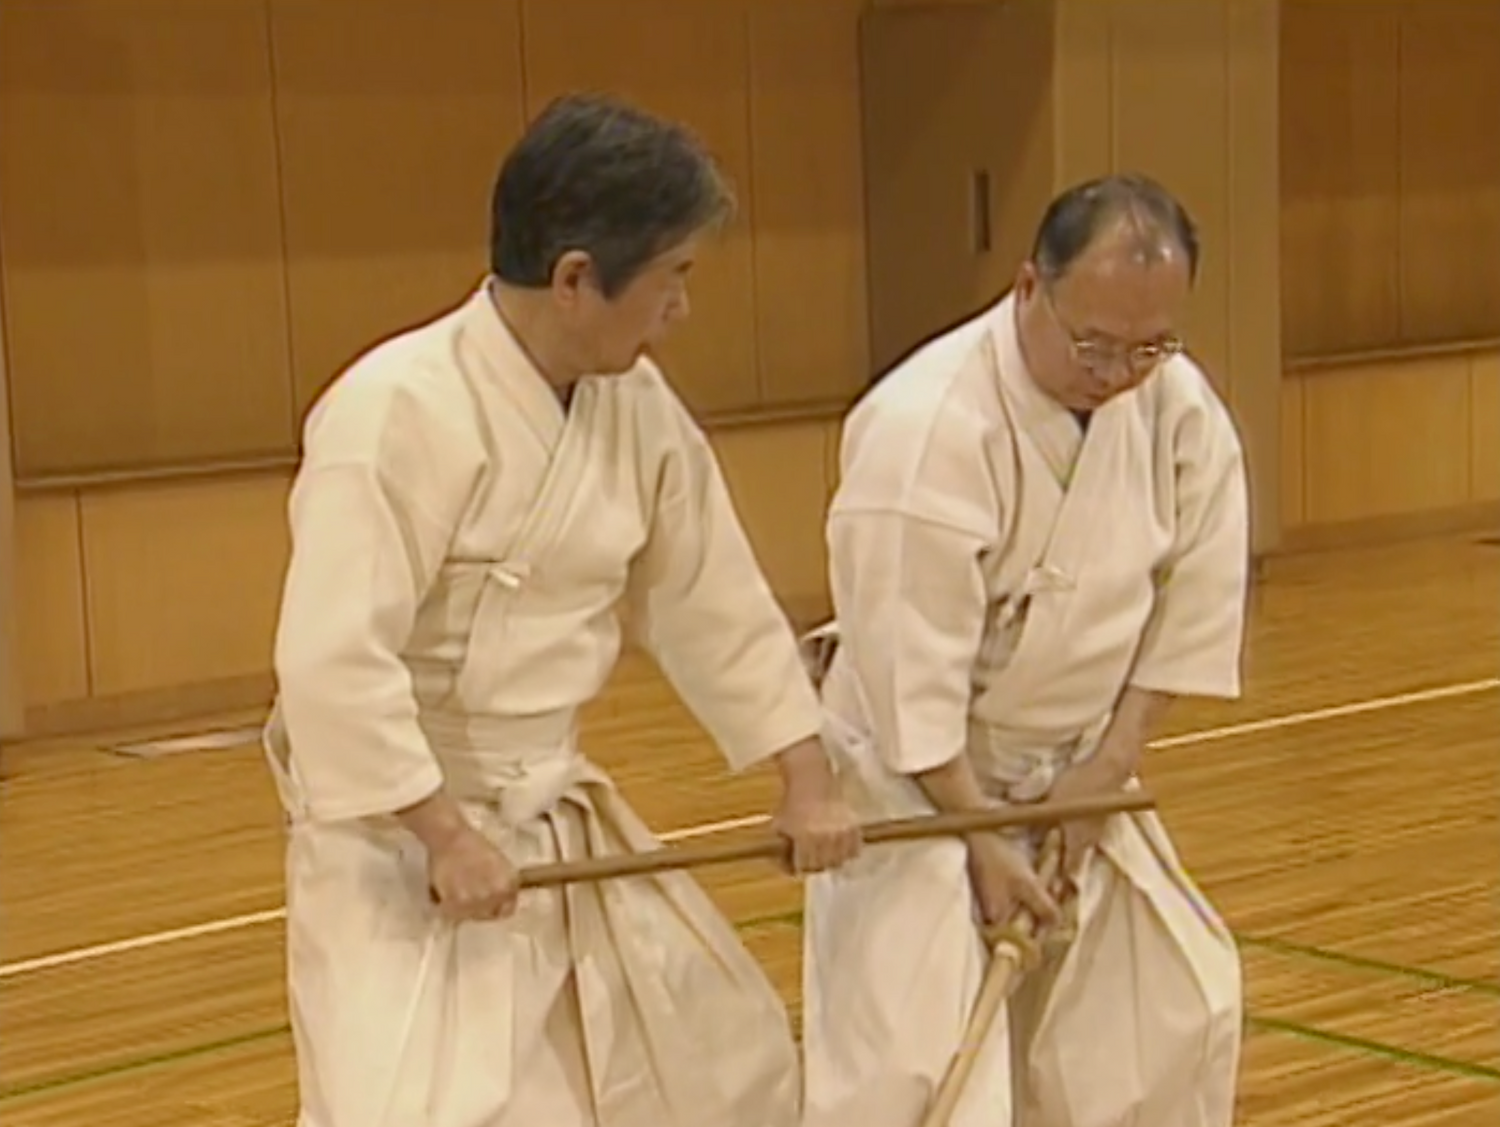 Shinto Muso Ryu: Technical Skills Vol 3 by Kenji Matsui DVD